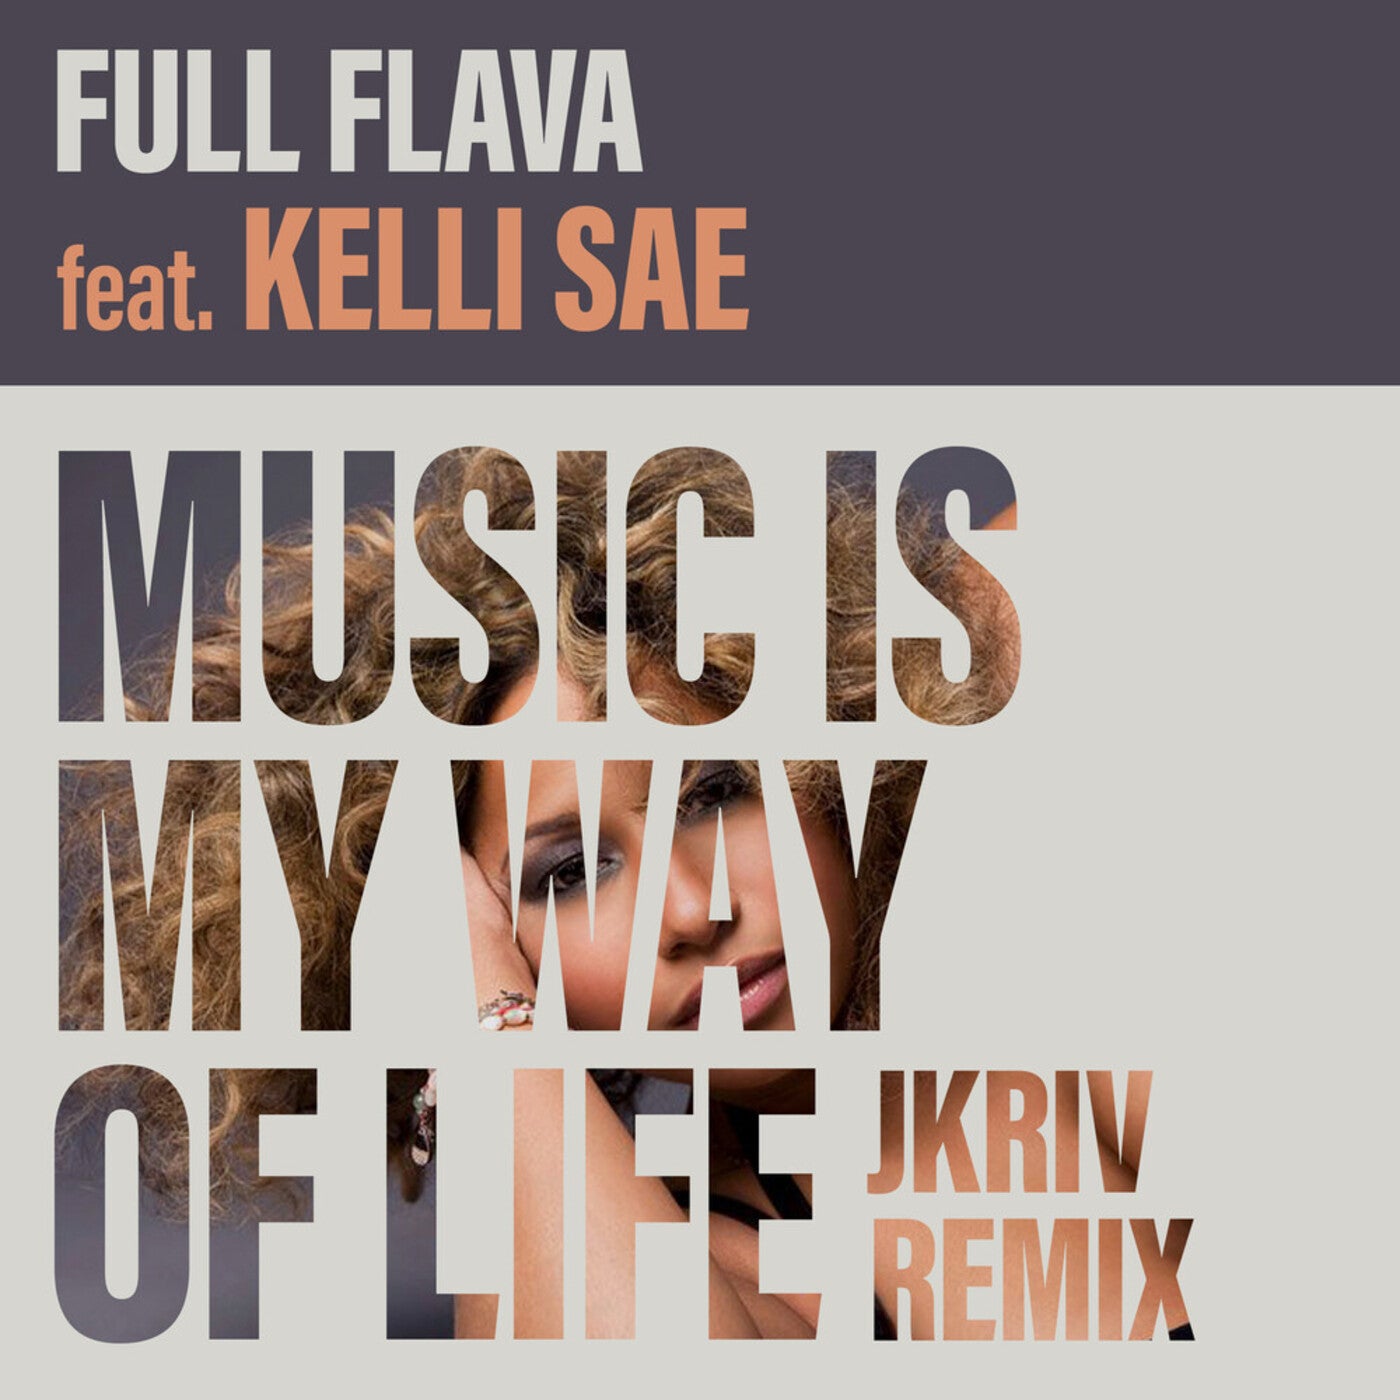 Music Is My Way Of Life (JKriv Remix)